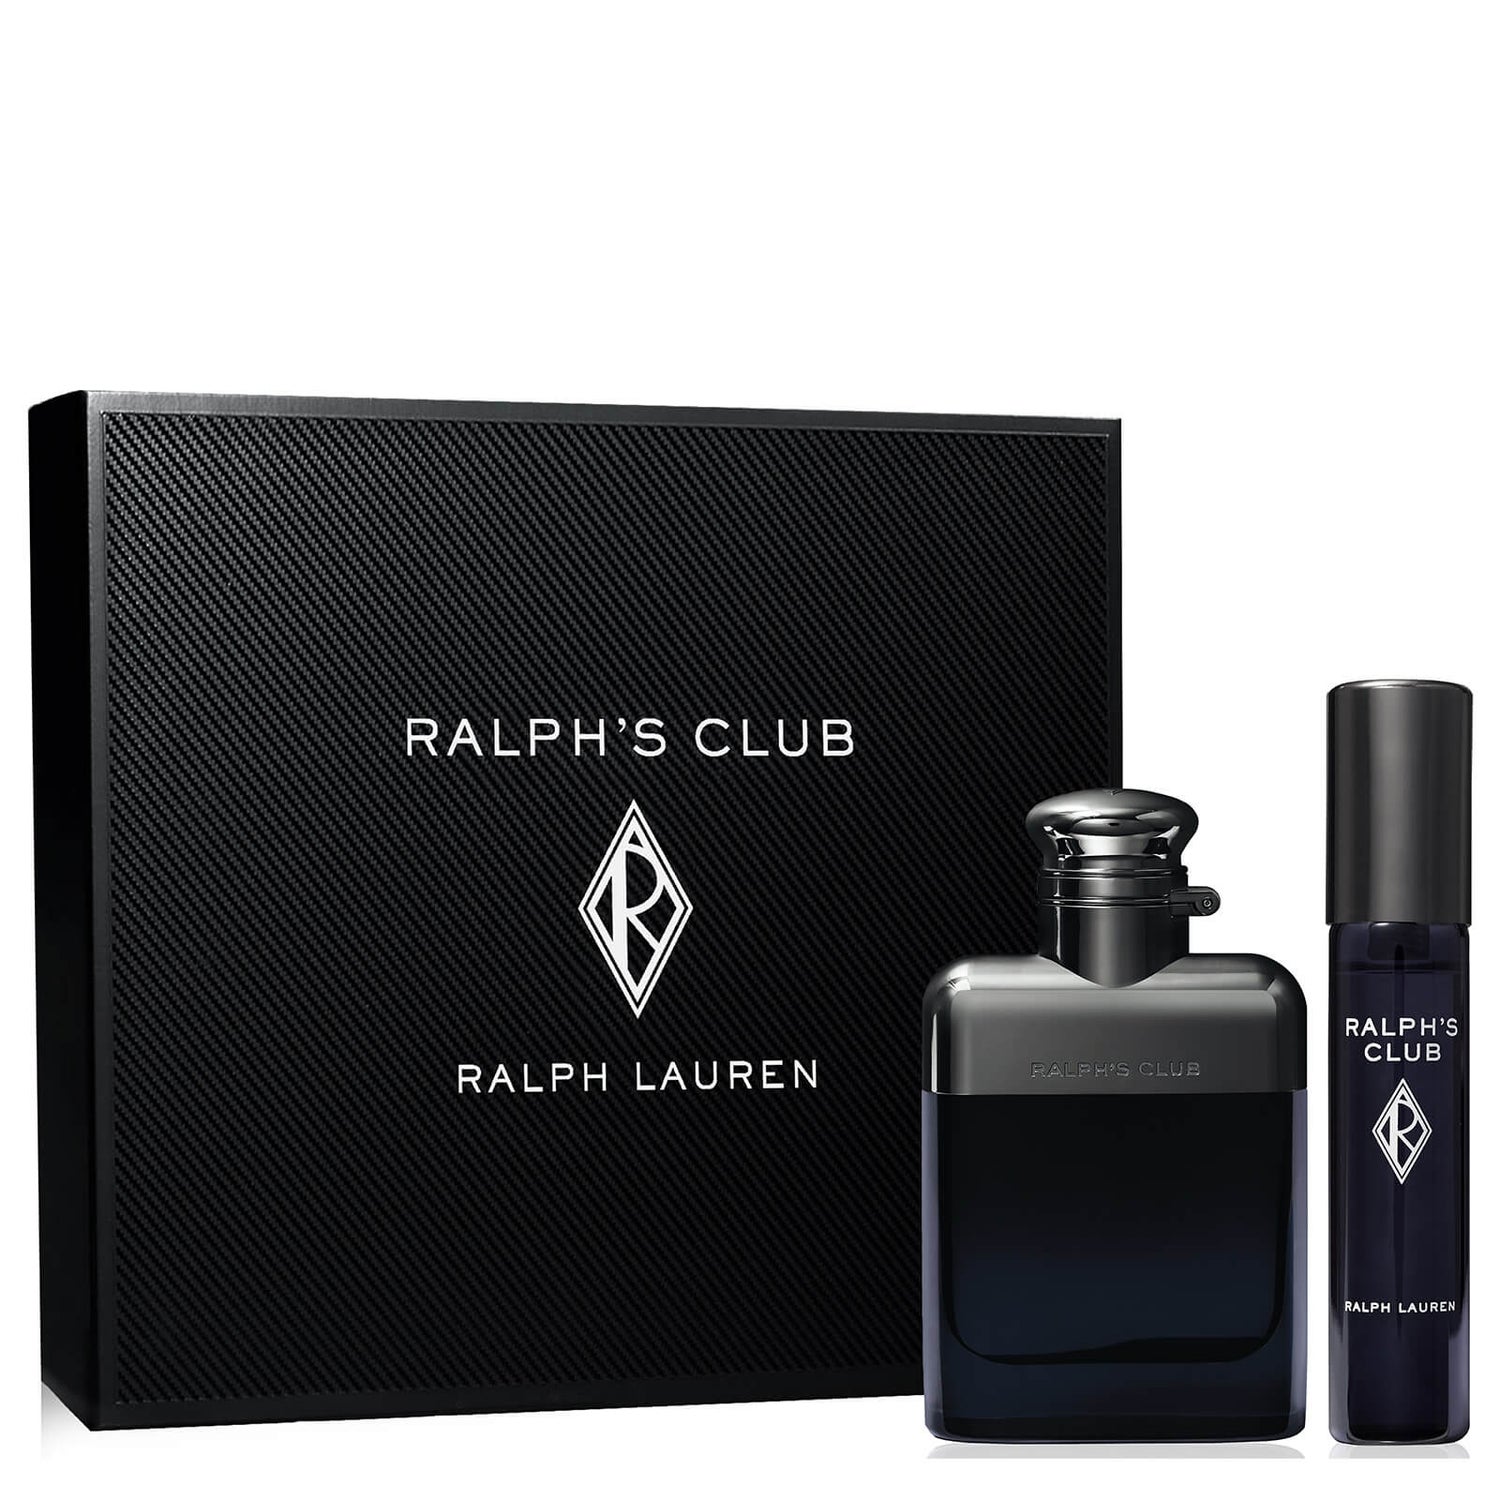 Ralph Lauren Ralph's Club Eau de Toilette Gift Set 50ml (wartość £64.00)